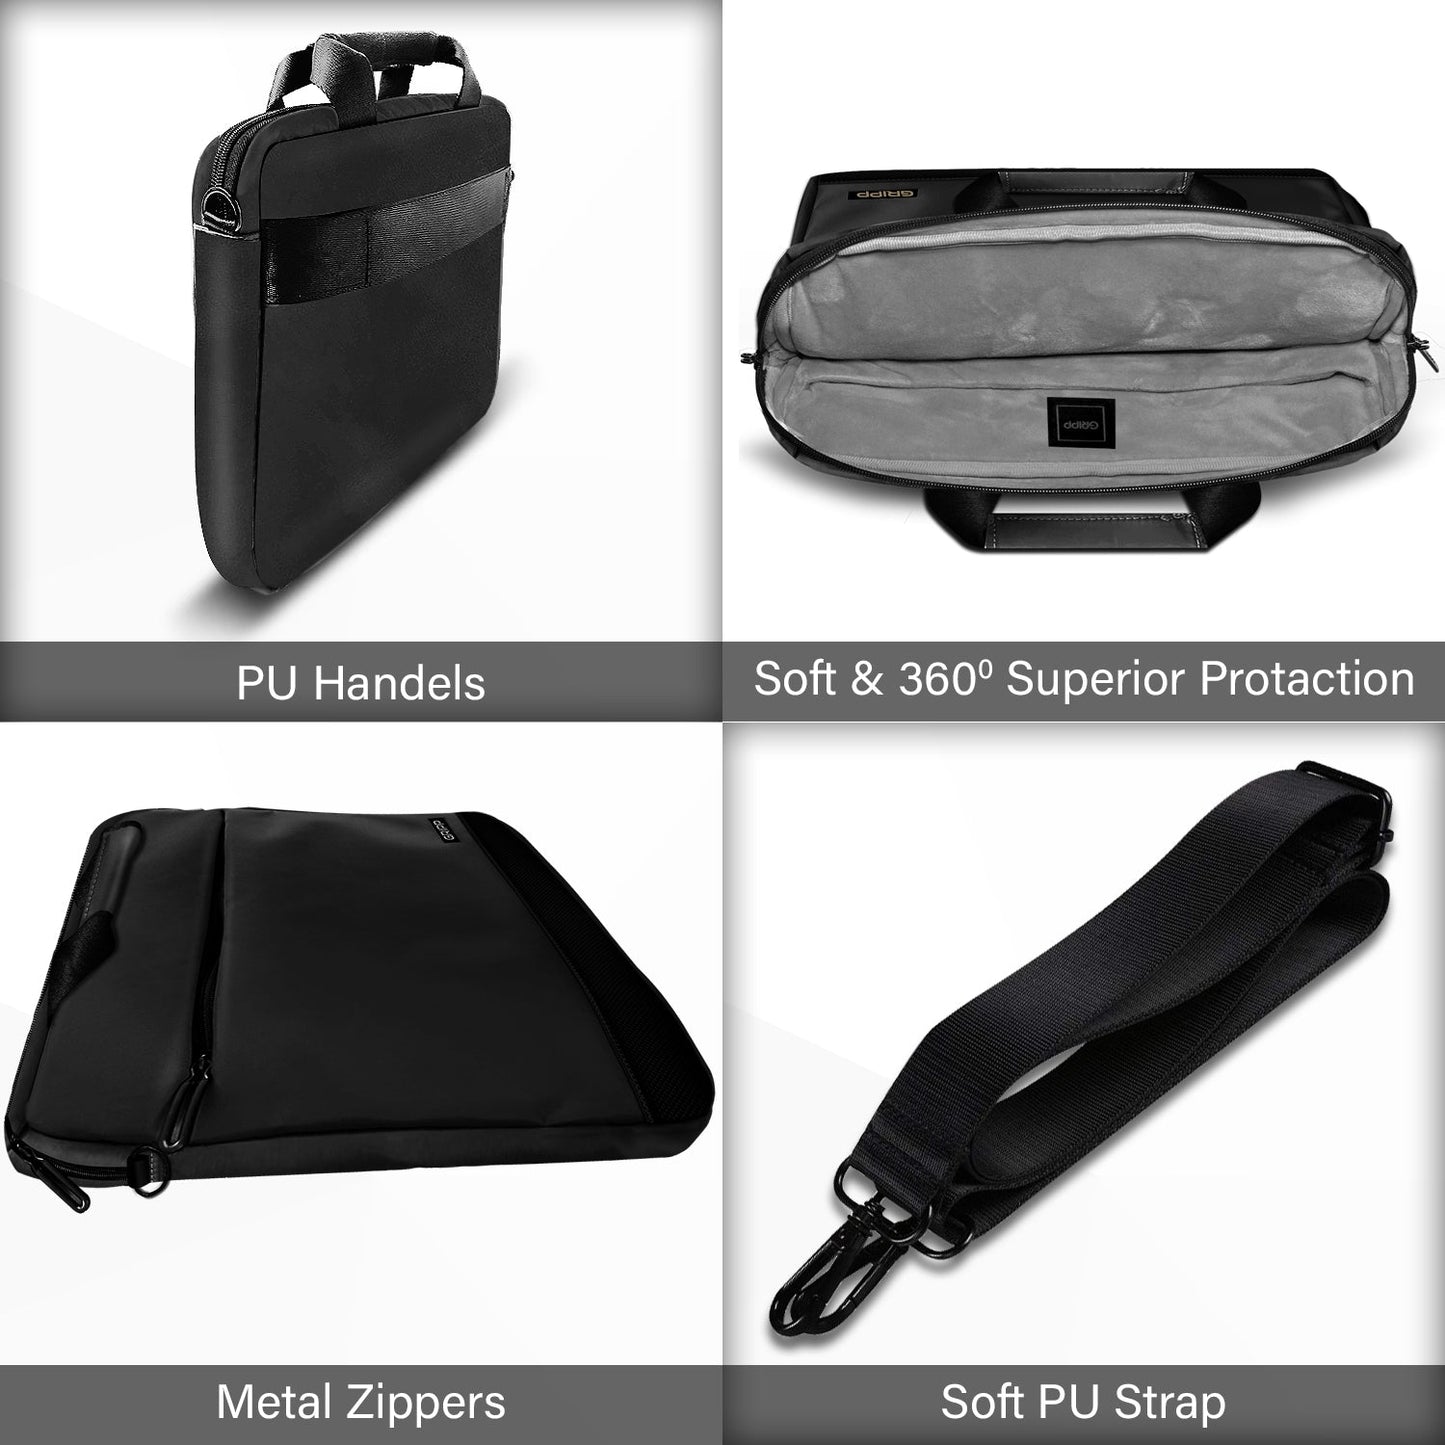 Gripp Bolt 13.3" Macbook/laptop Bag - Black